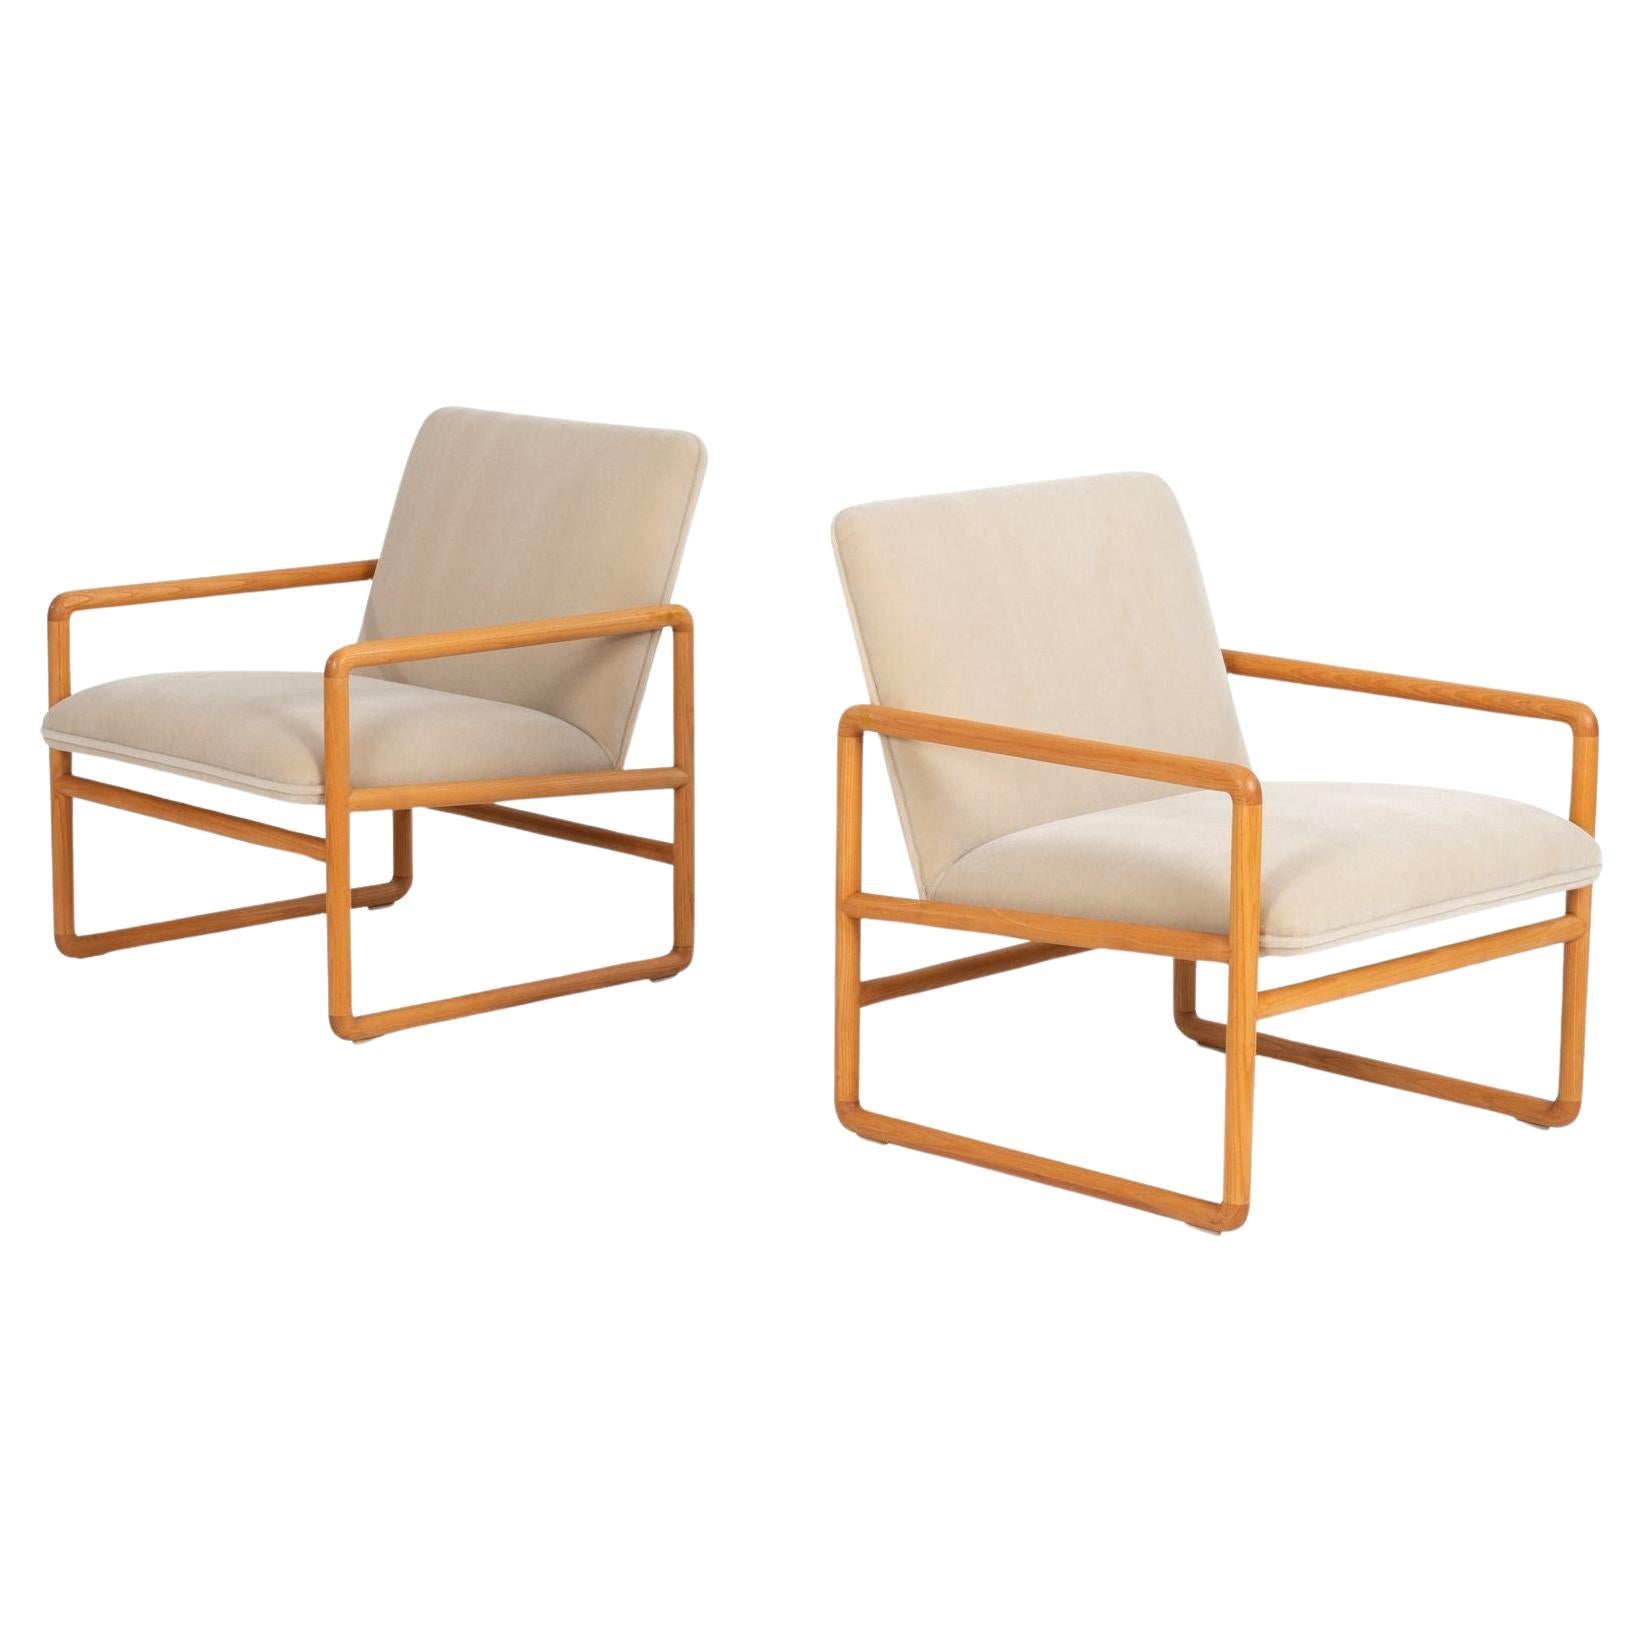 Ward Bennett Lounge Chairs in Solid Oak for Brickel Associates 1965c. For Sale